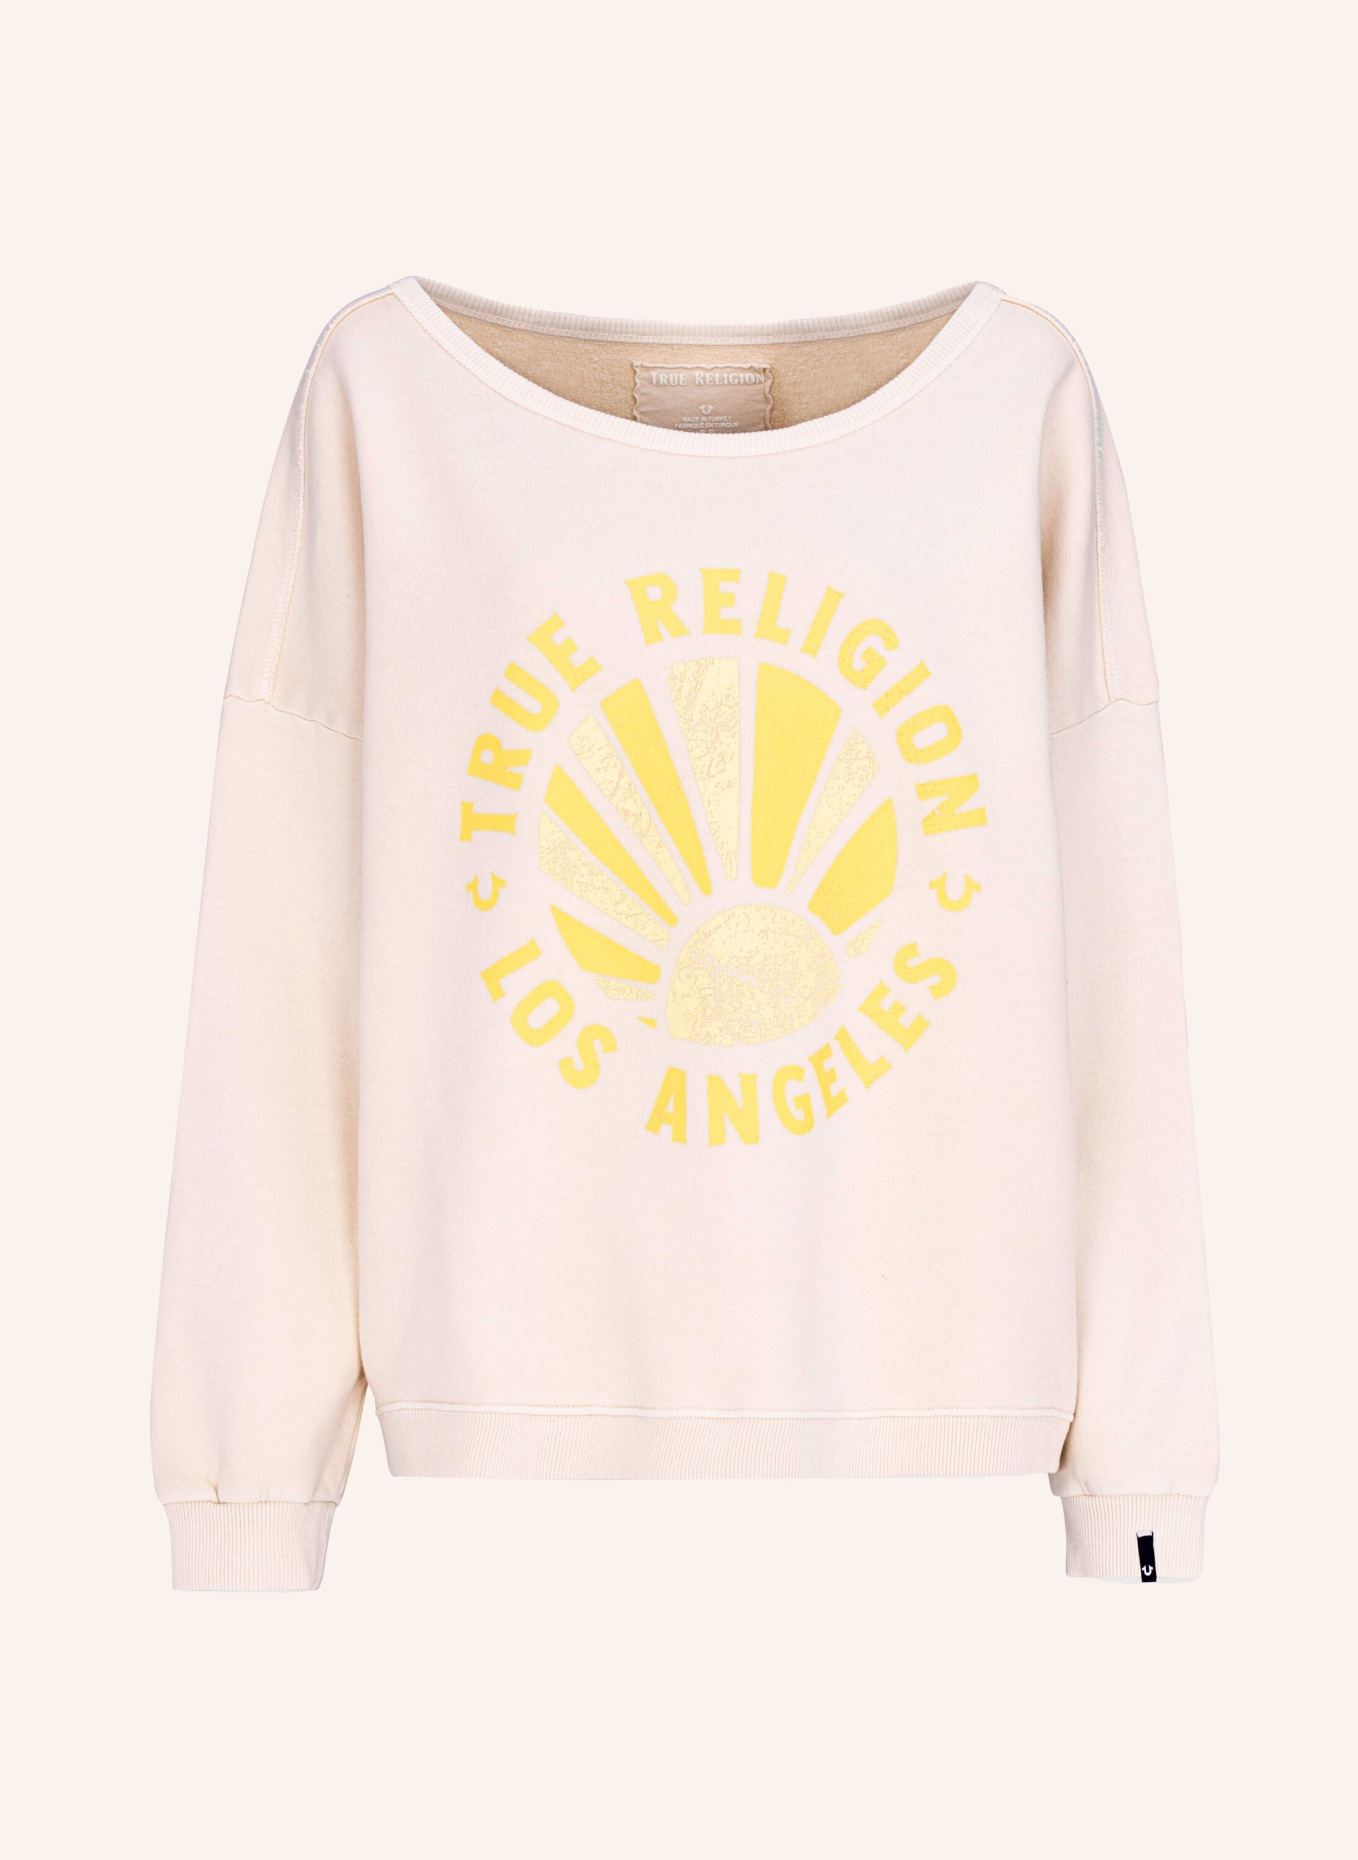 TRUE RELIGION Sweatshirt MALIBU, Farbe: BEIGE (Bild 1)